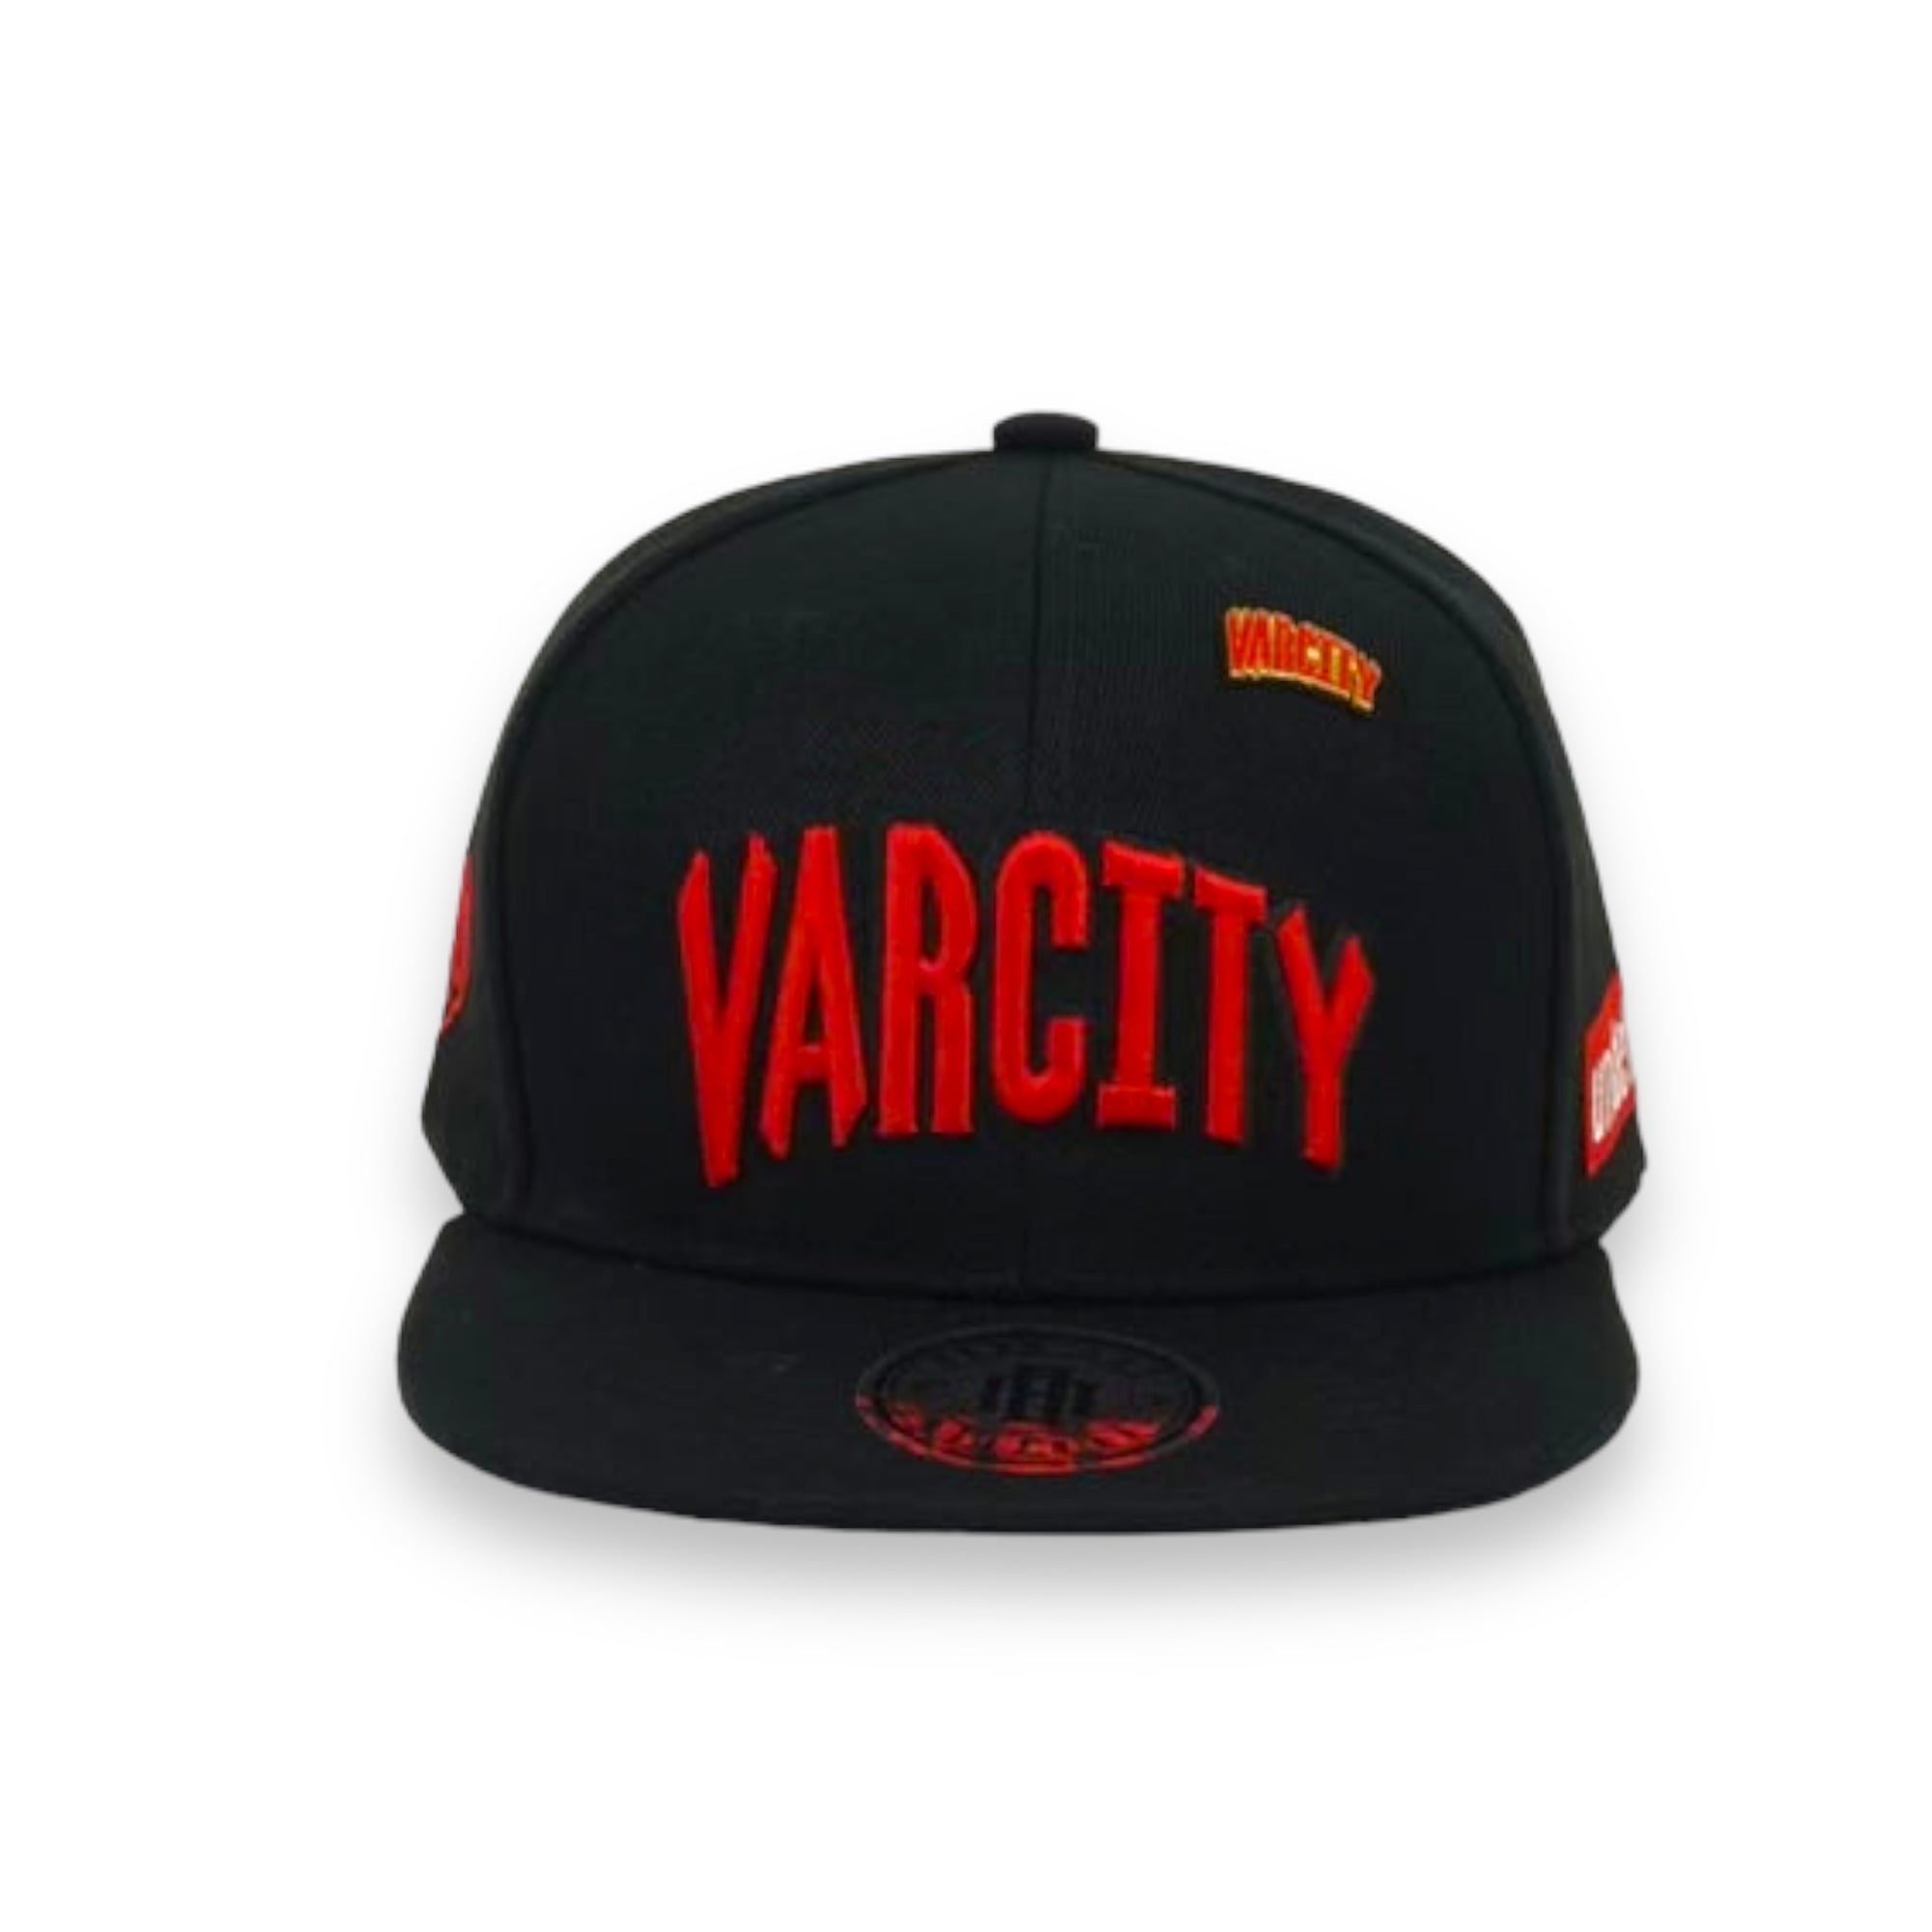 Varcity Undefined SnapBack Black